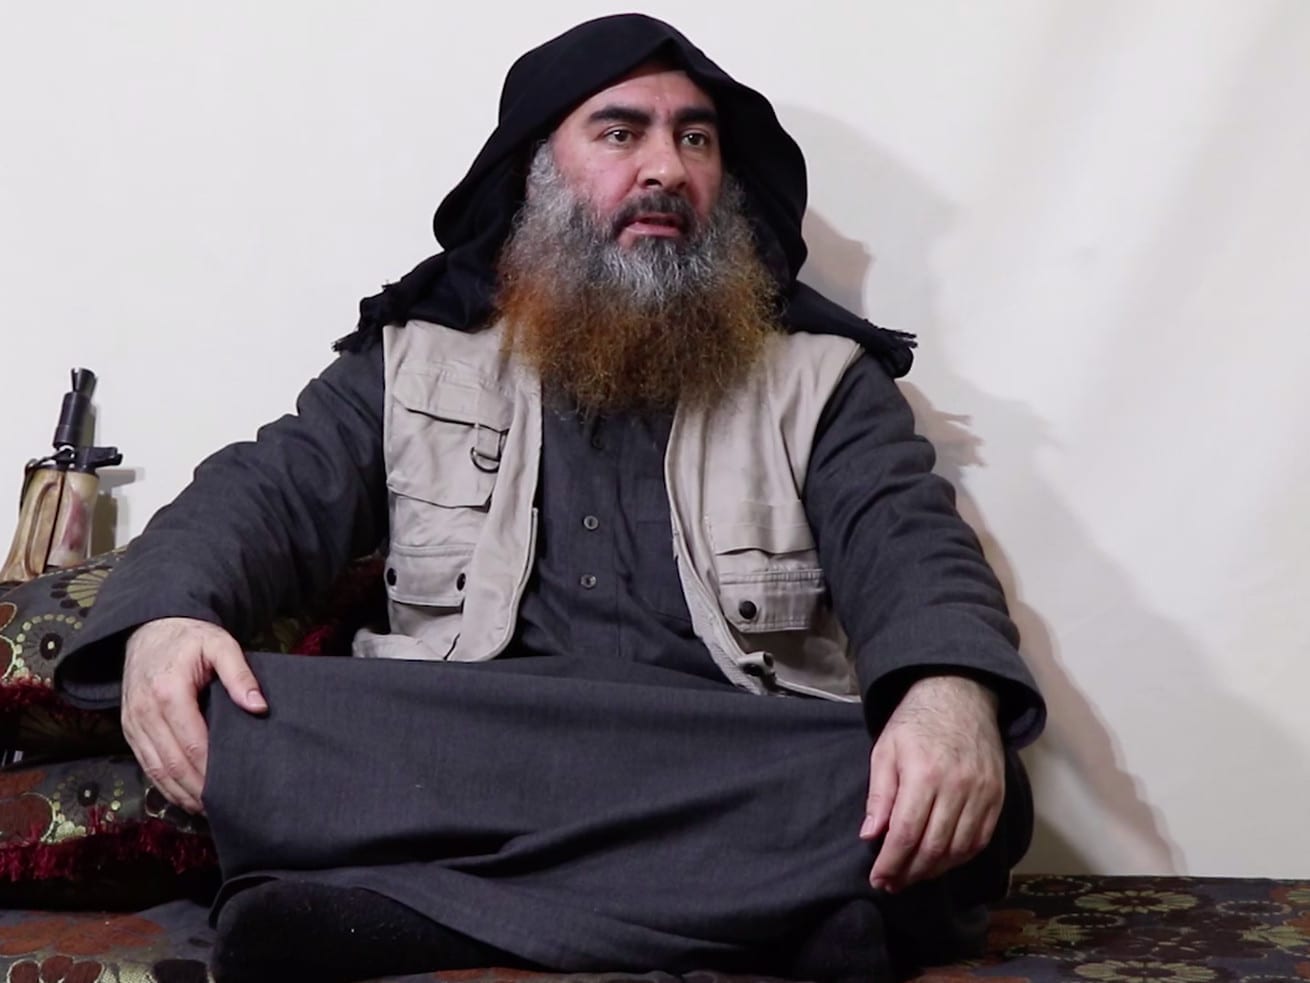 Trump says the US killed ISIS leader Abu Bakr al-Baghdadi